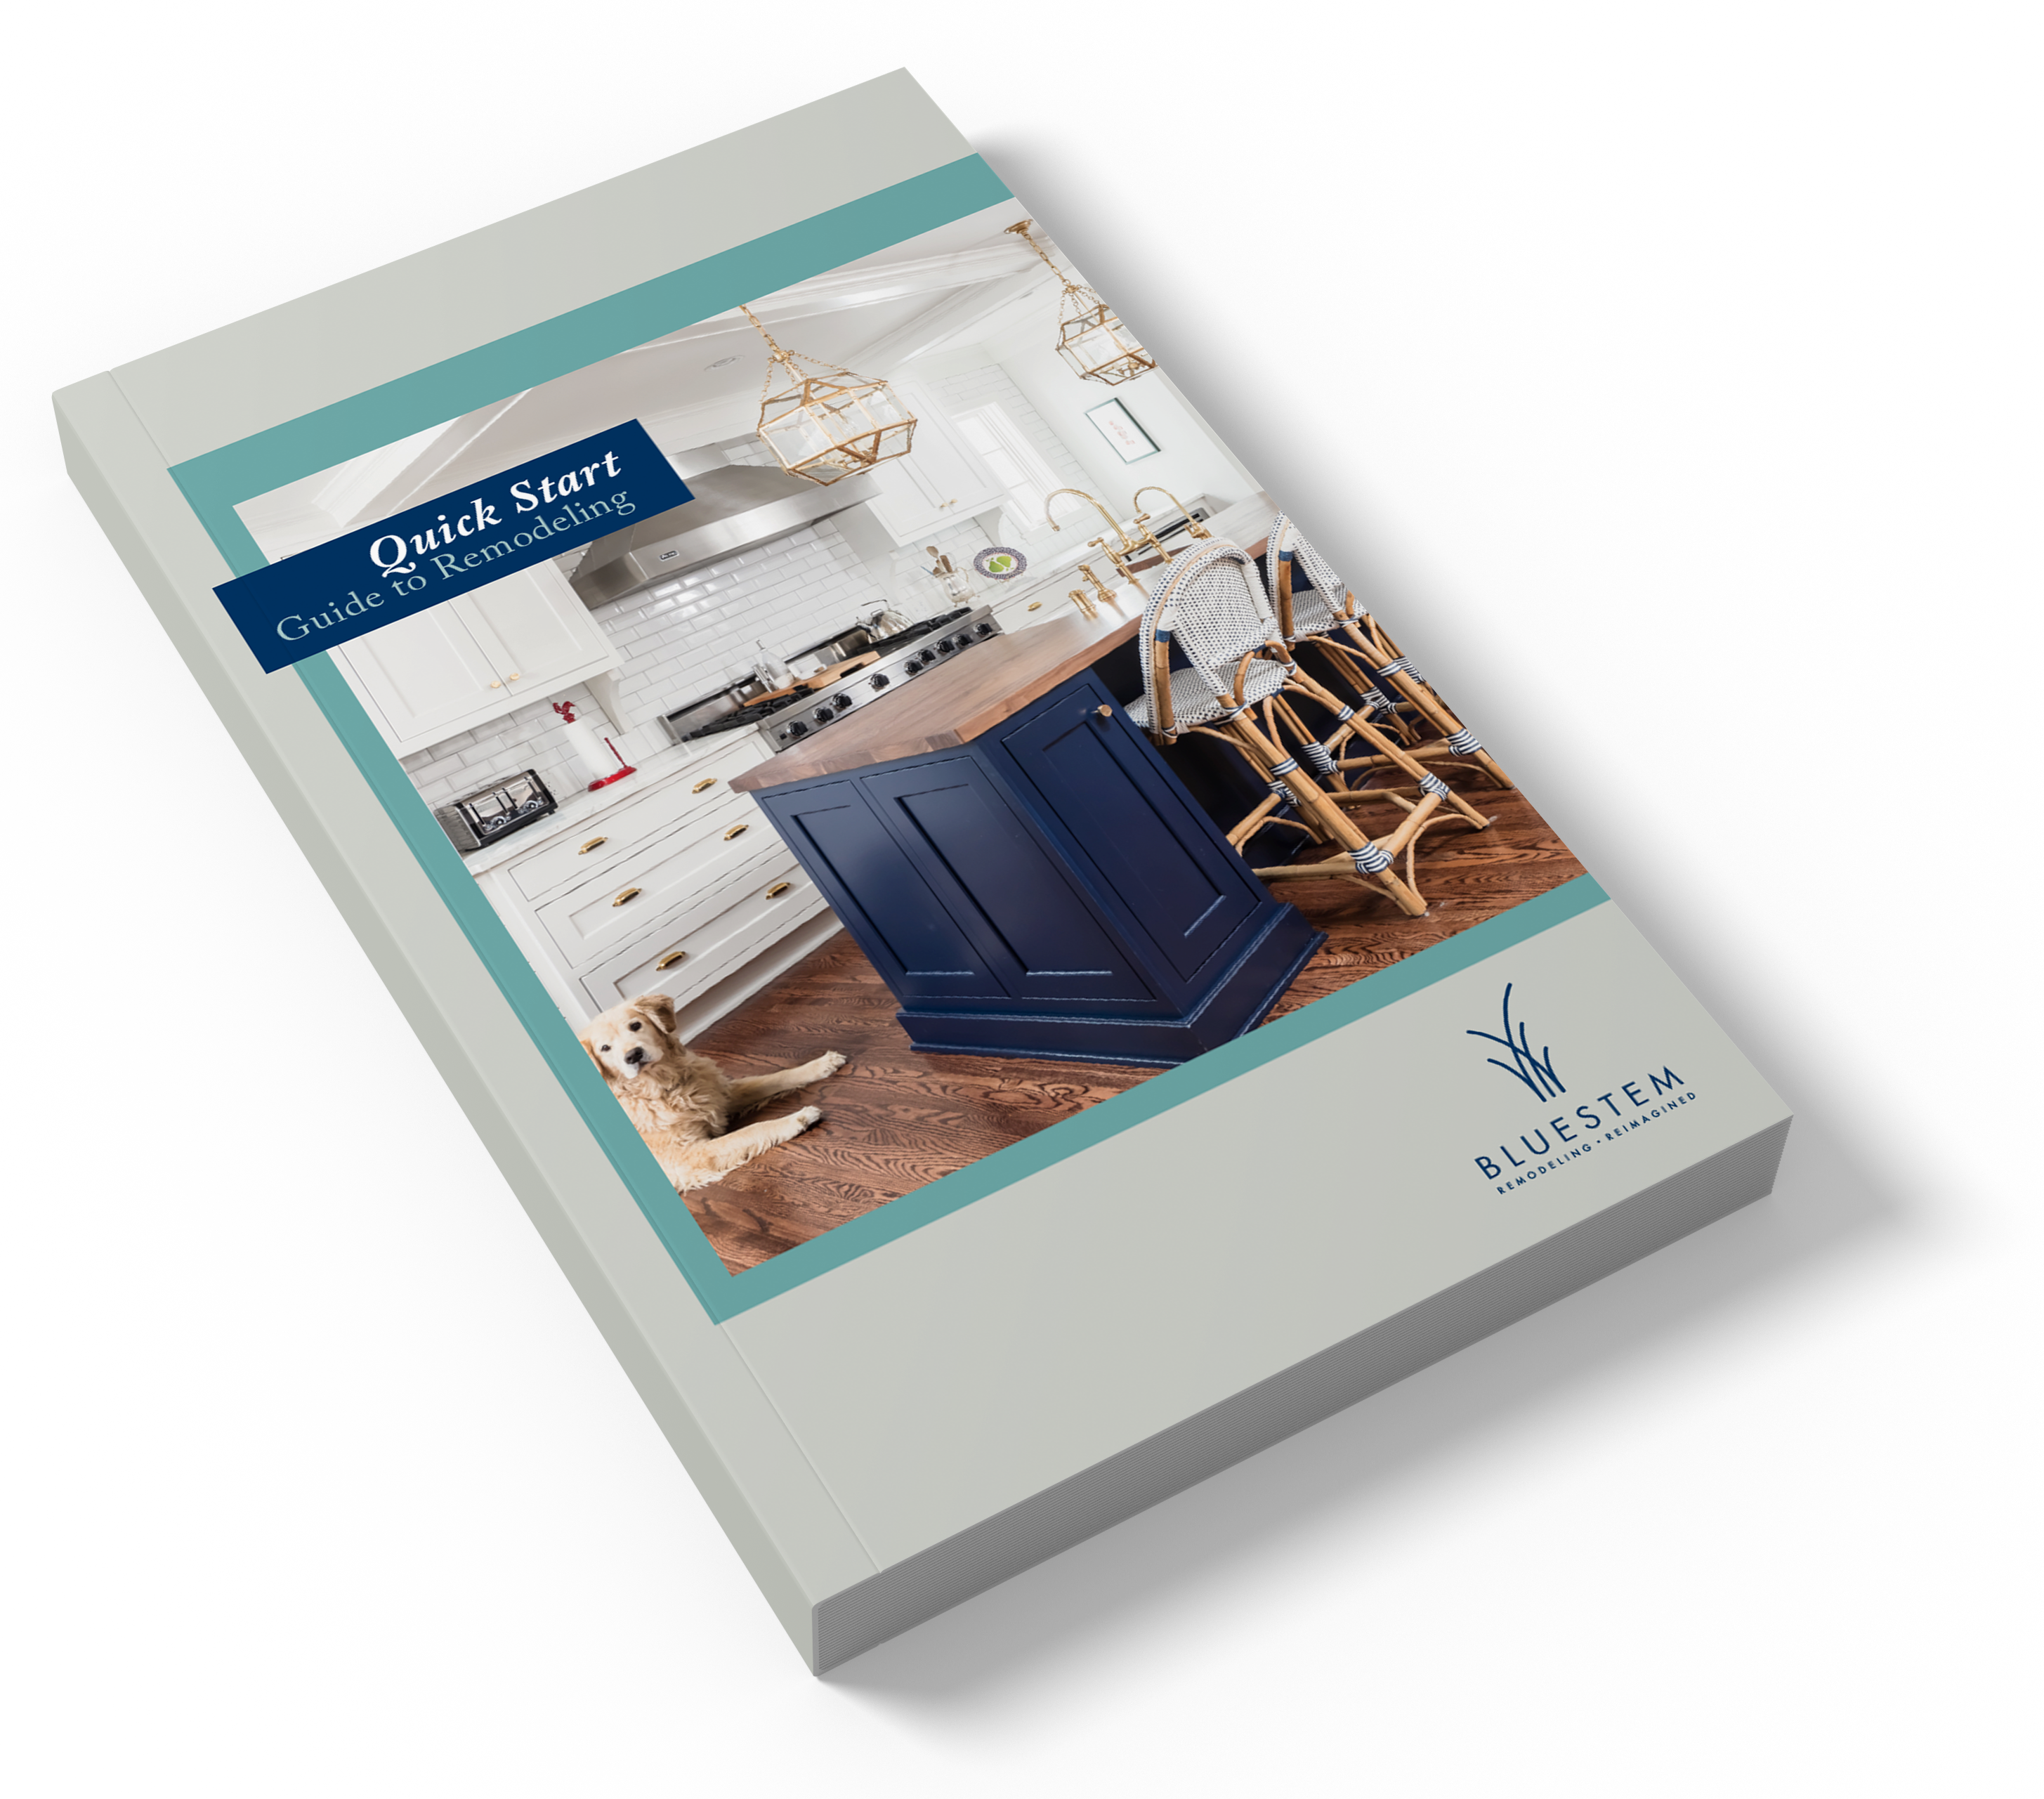 Quickstart guide to remodeling book cover image - bluestem remodeling information guide